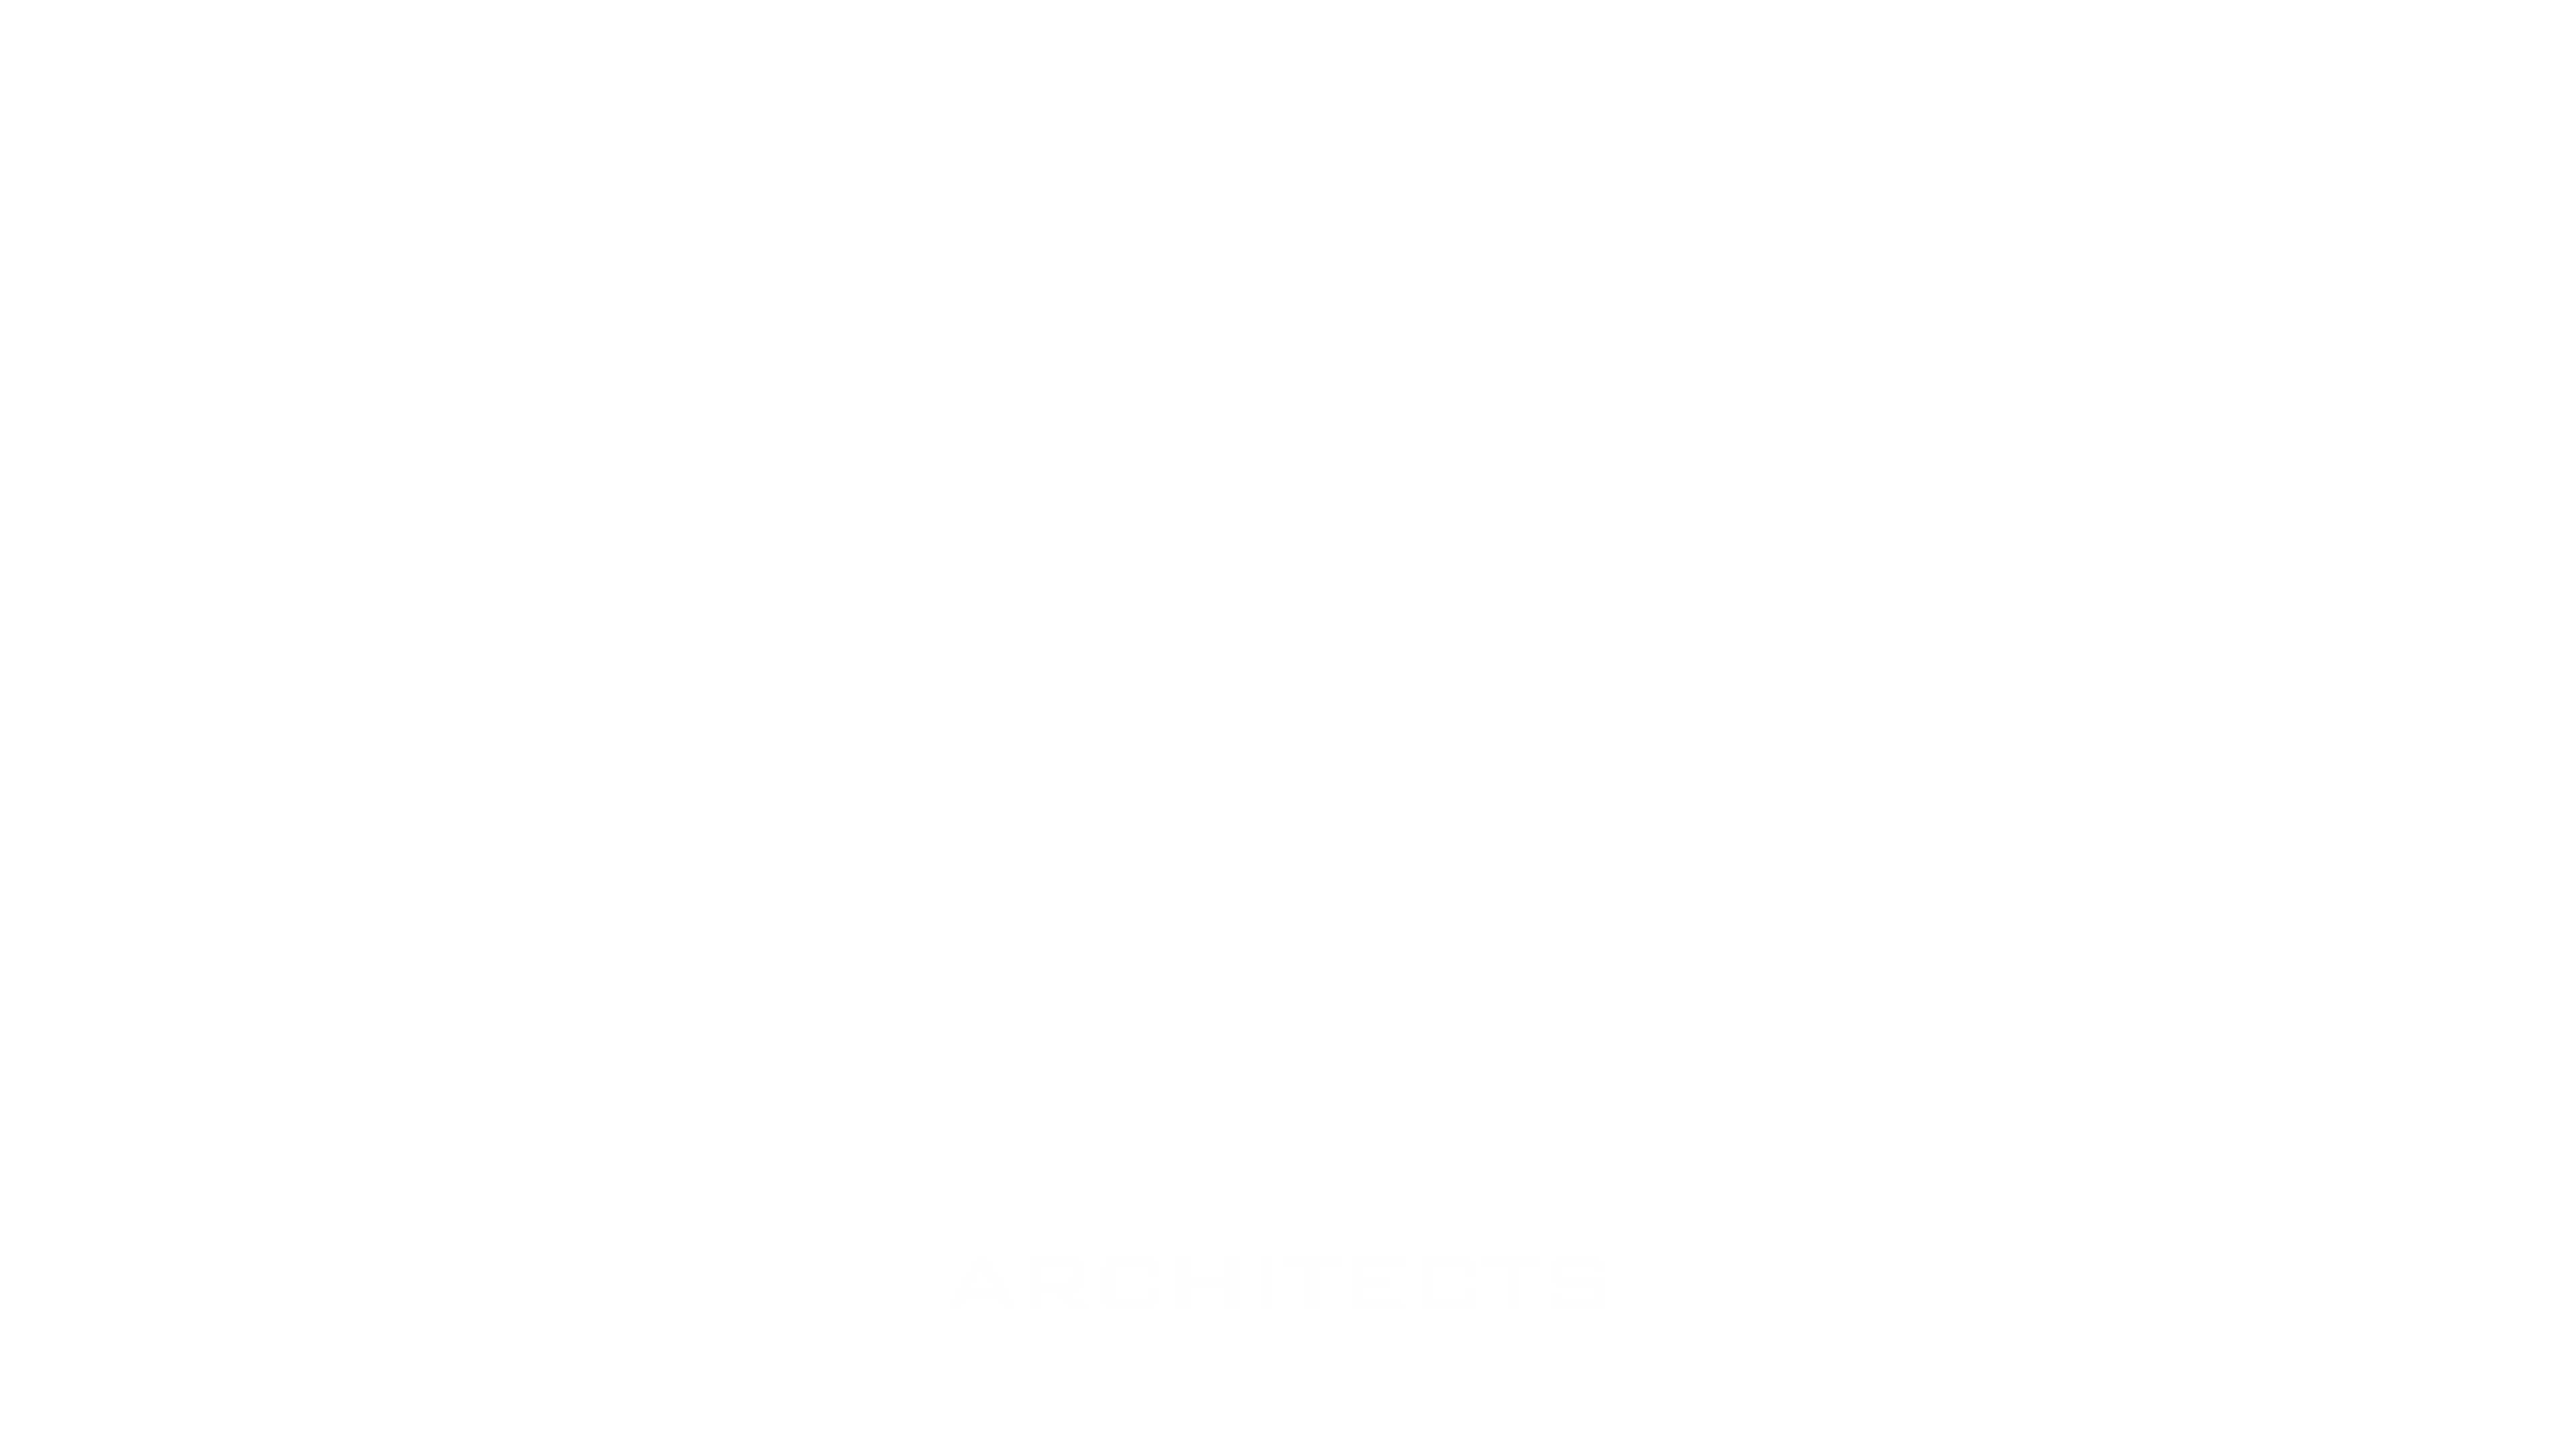 Abdullah Bouarki Architects